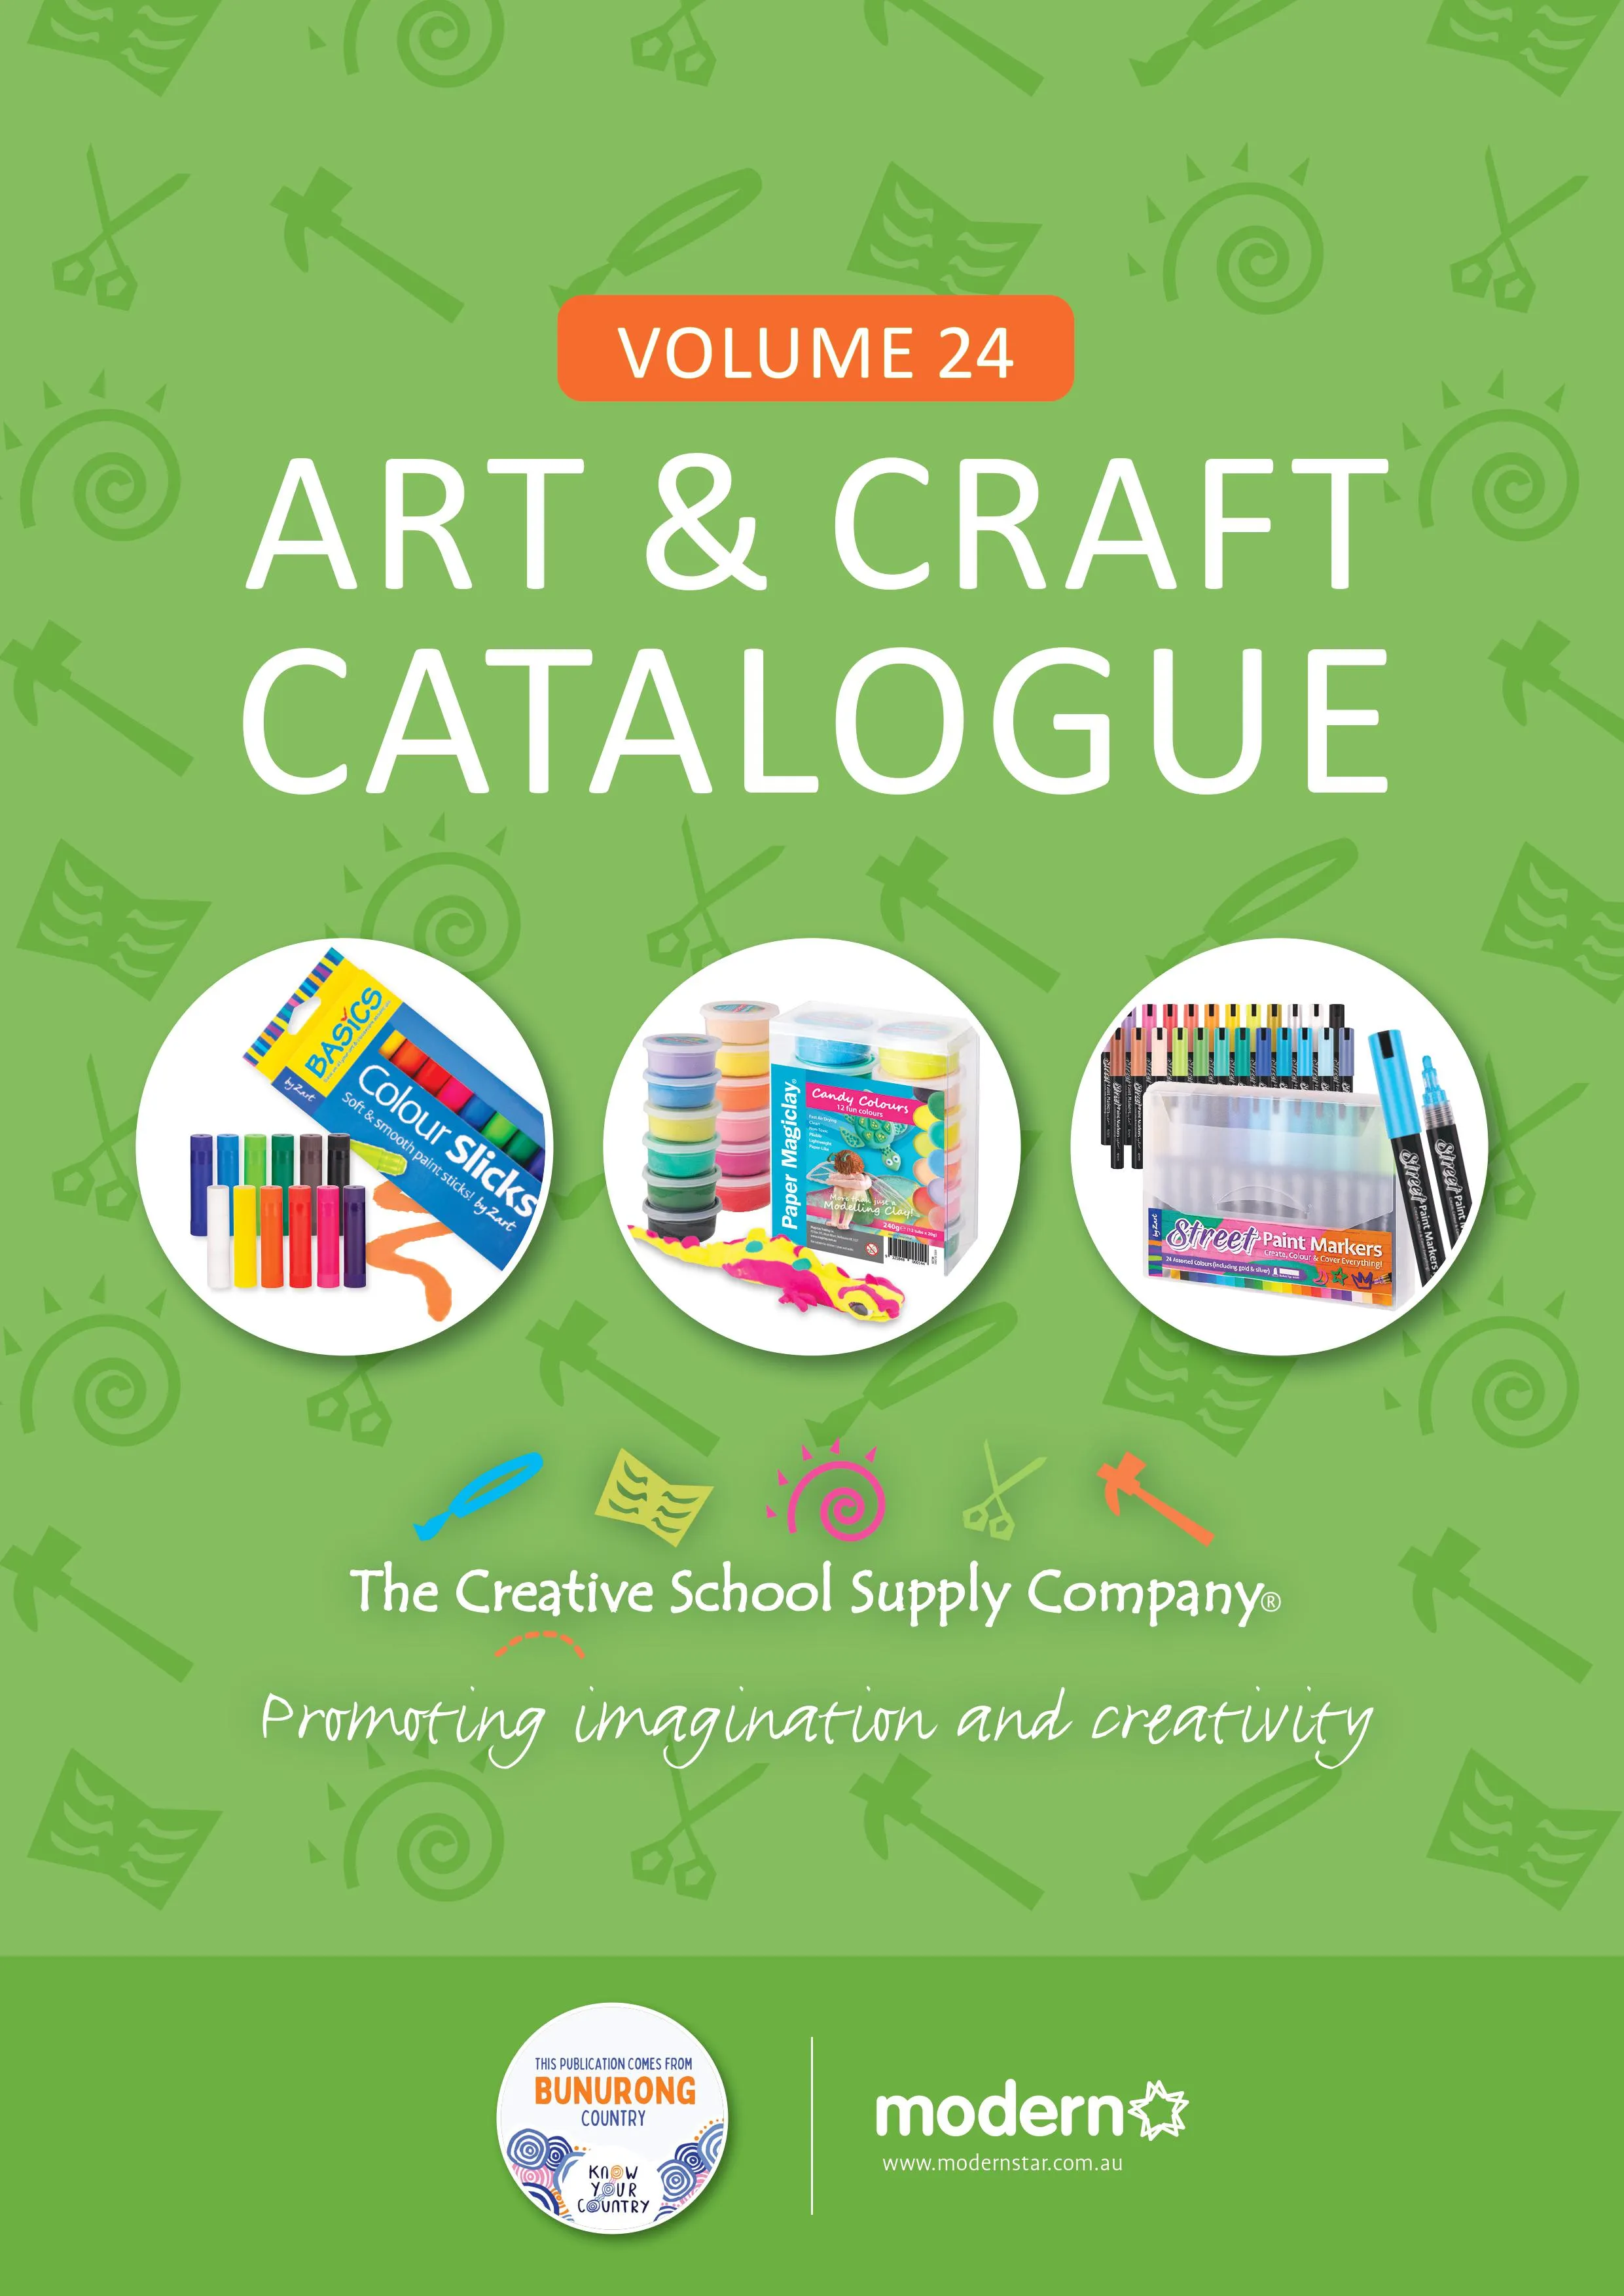 The Creative School Supply Company